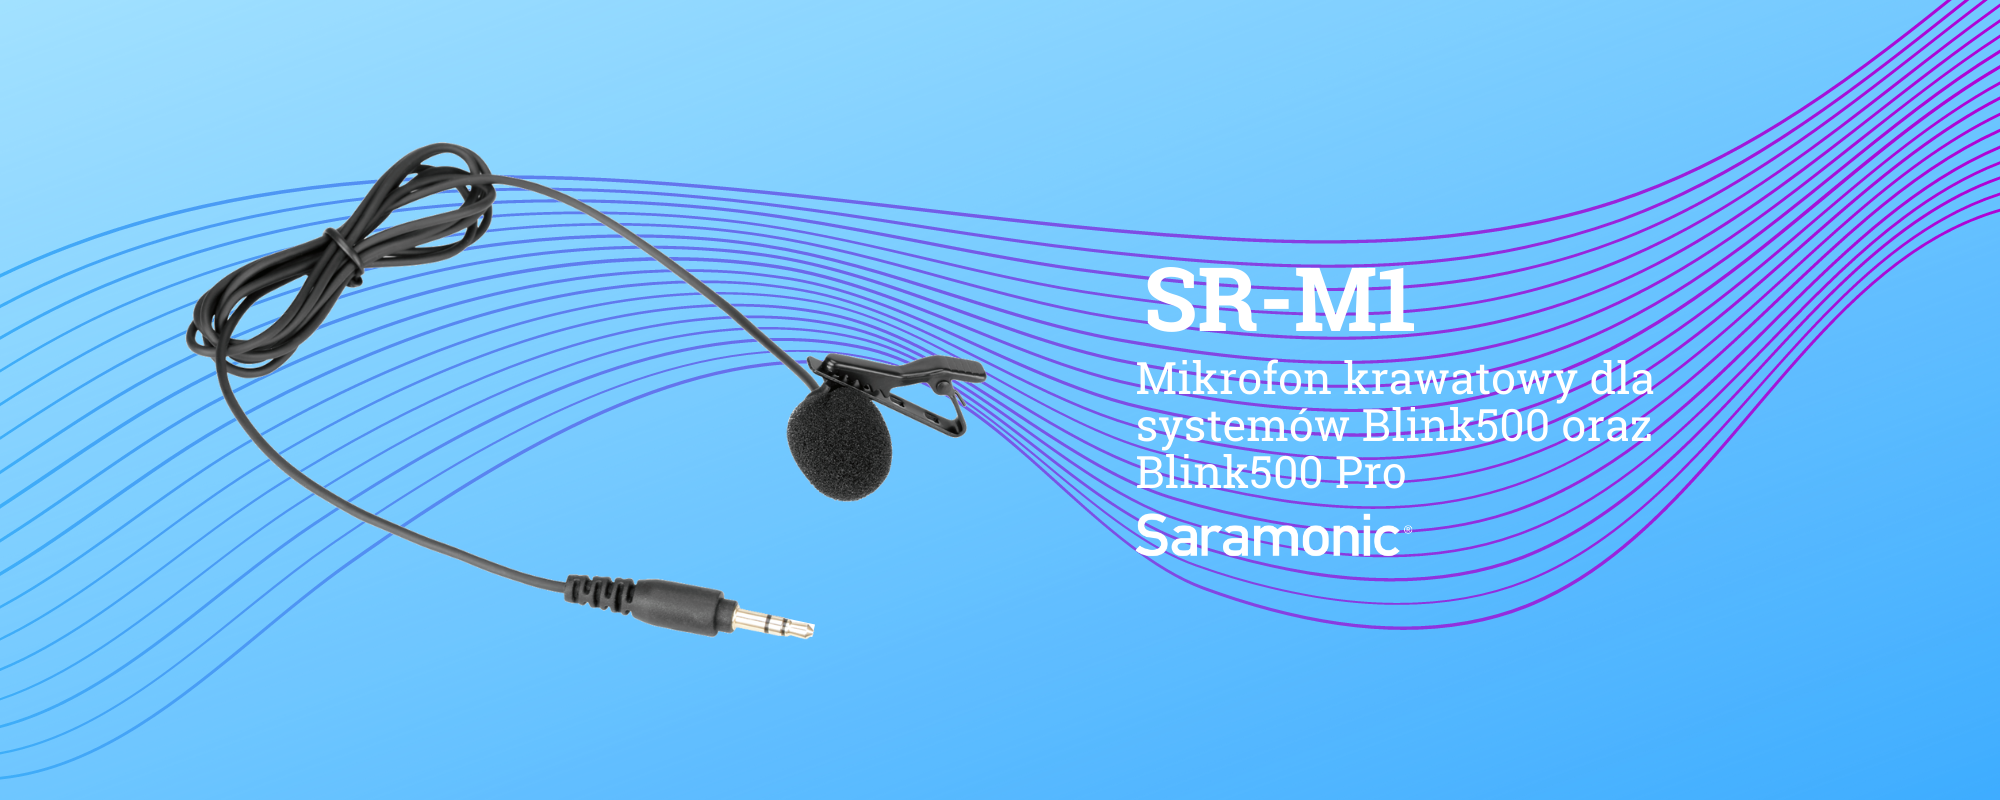 Mikrofon krawatowy Saramonic SR-M1 do Blink500 i Blink500 Pro